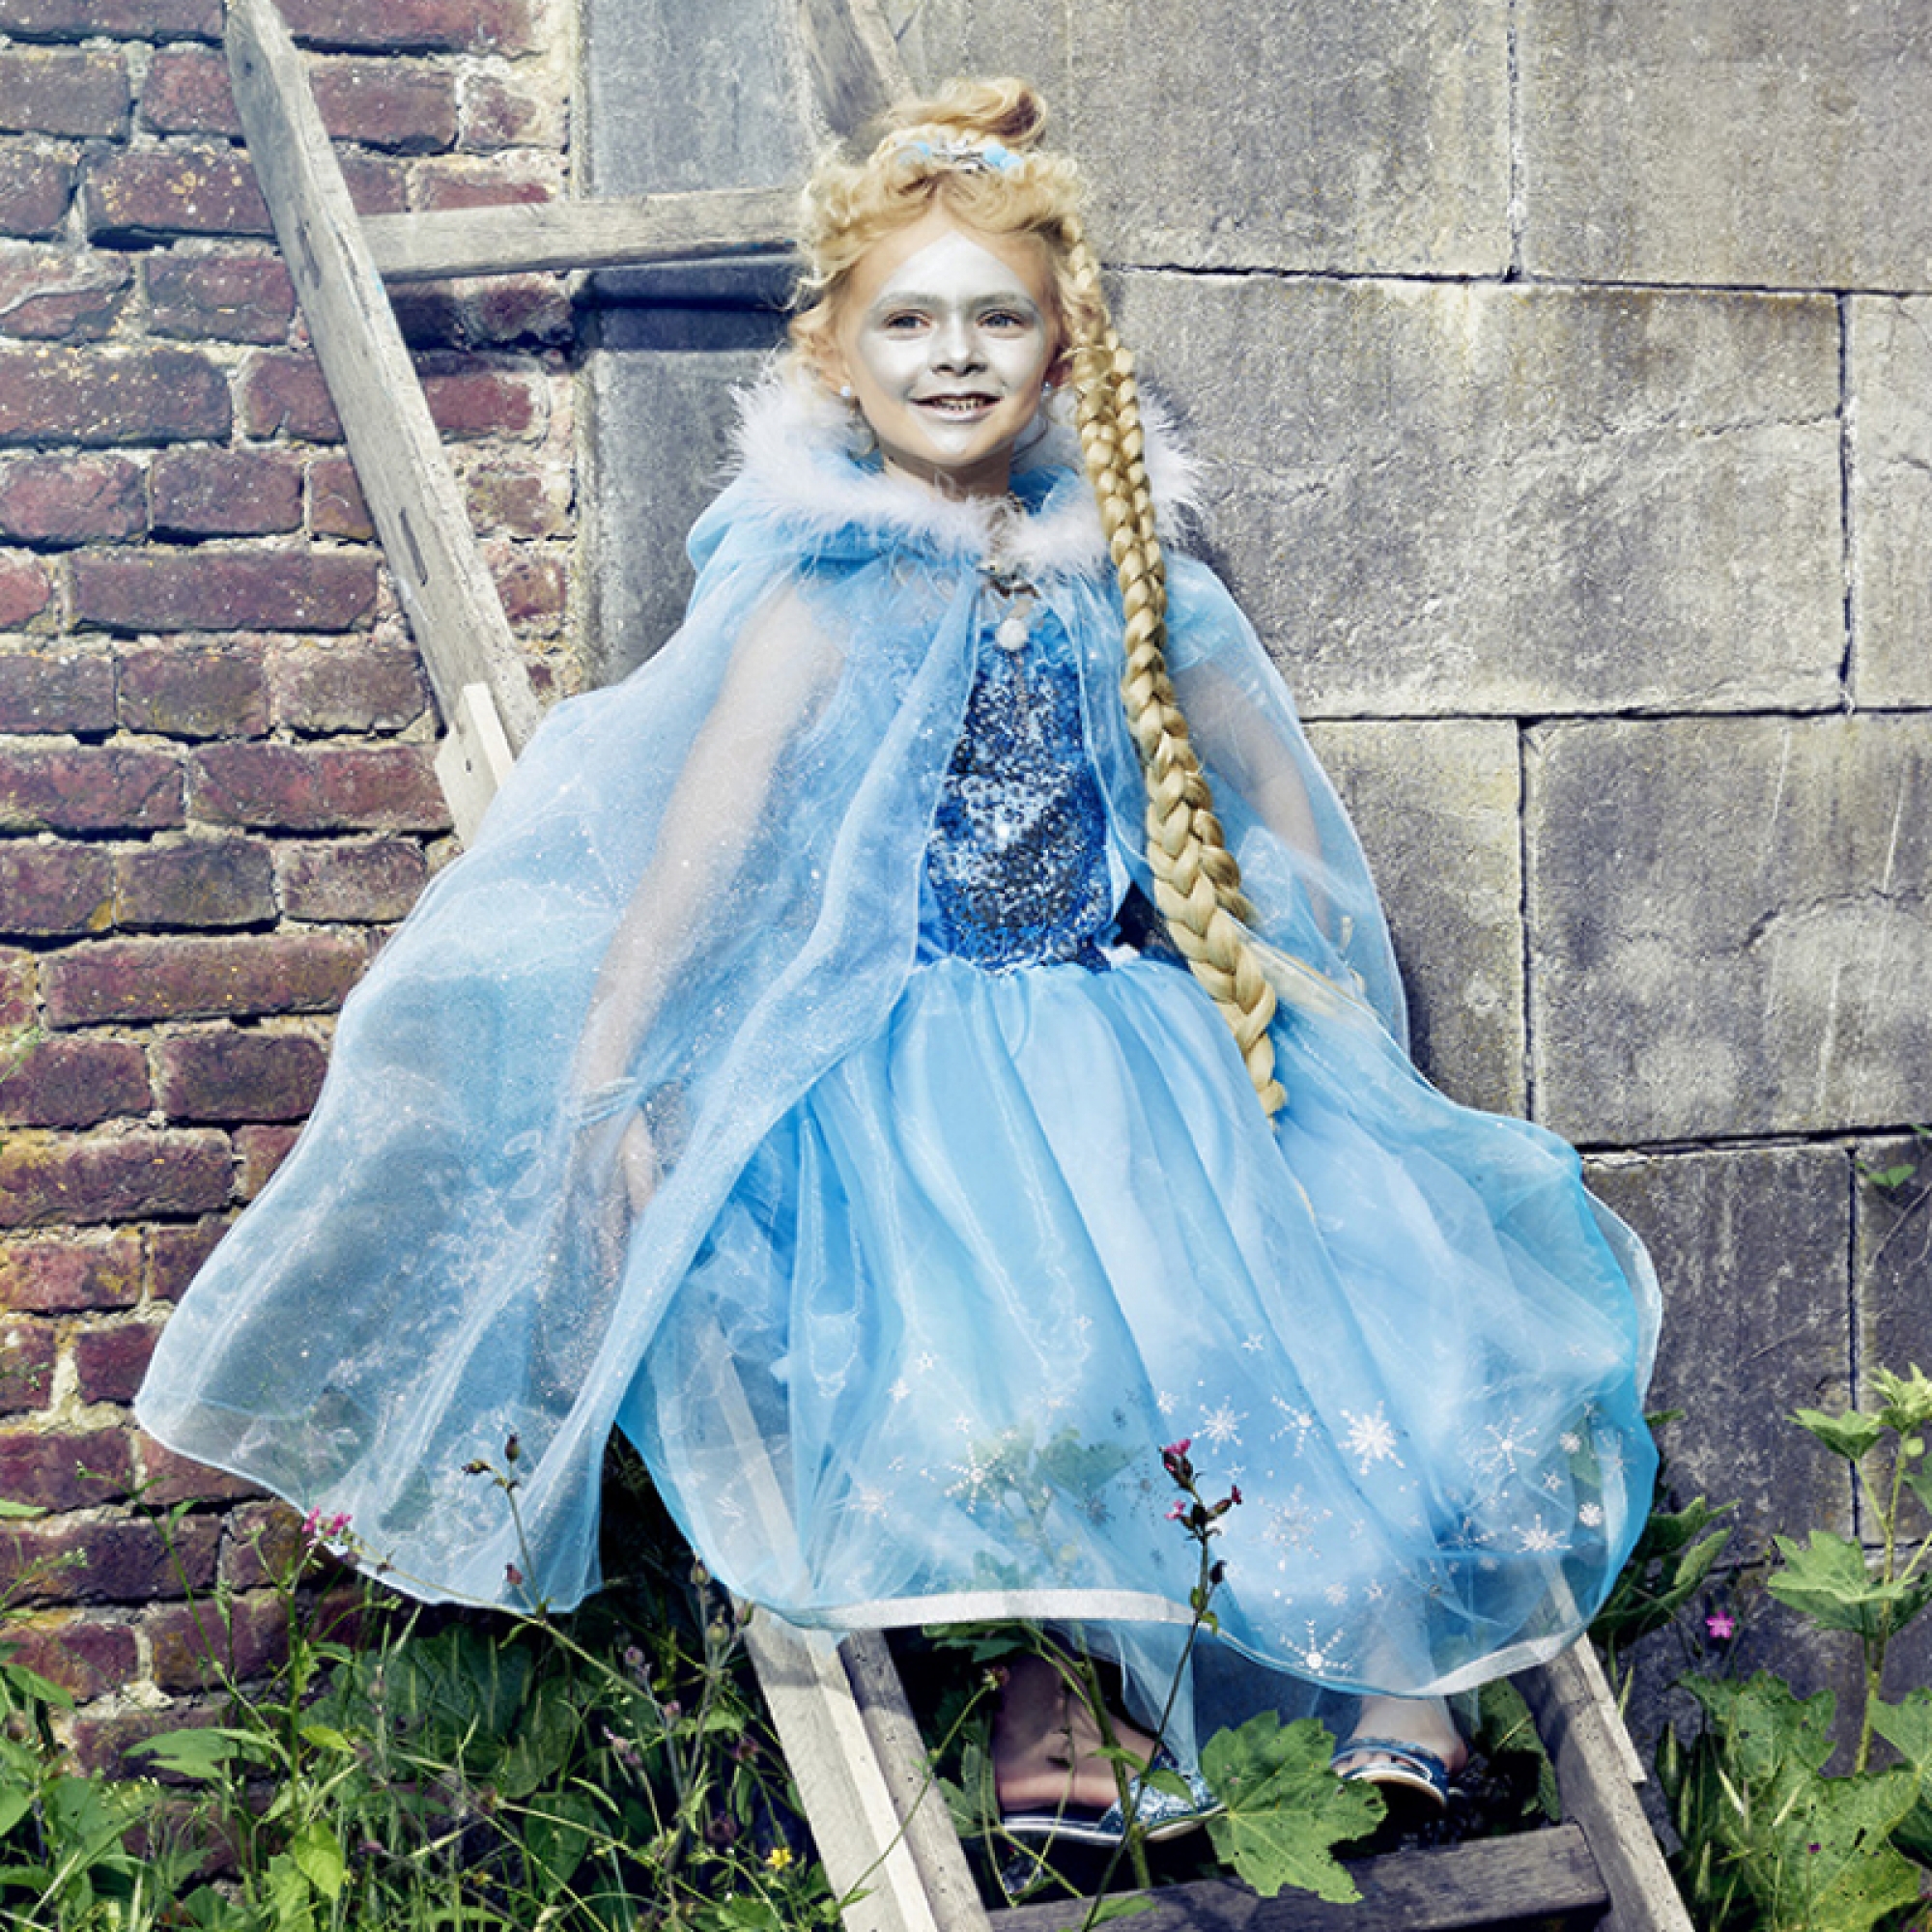 Robe Princesse Fille Etoiles – Ma Robe Princesse